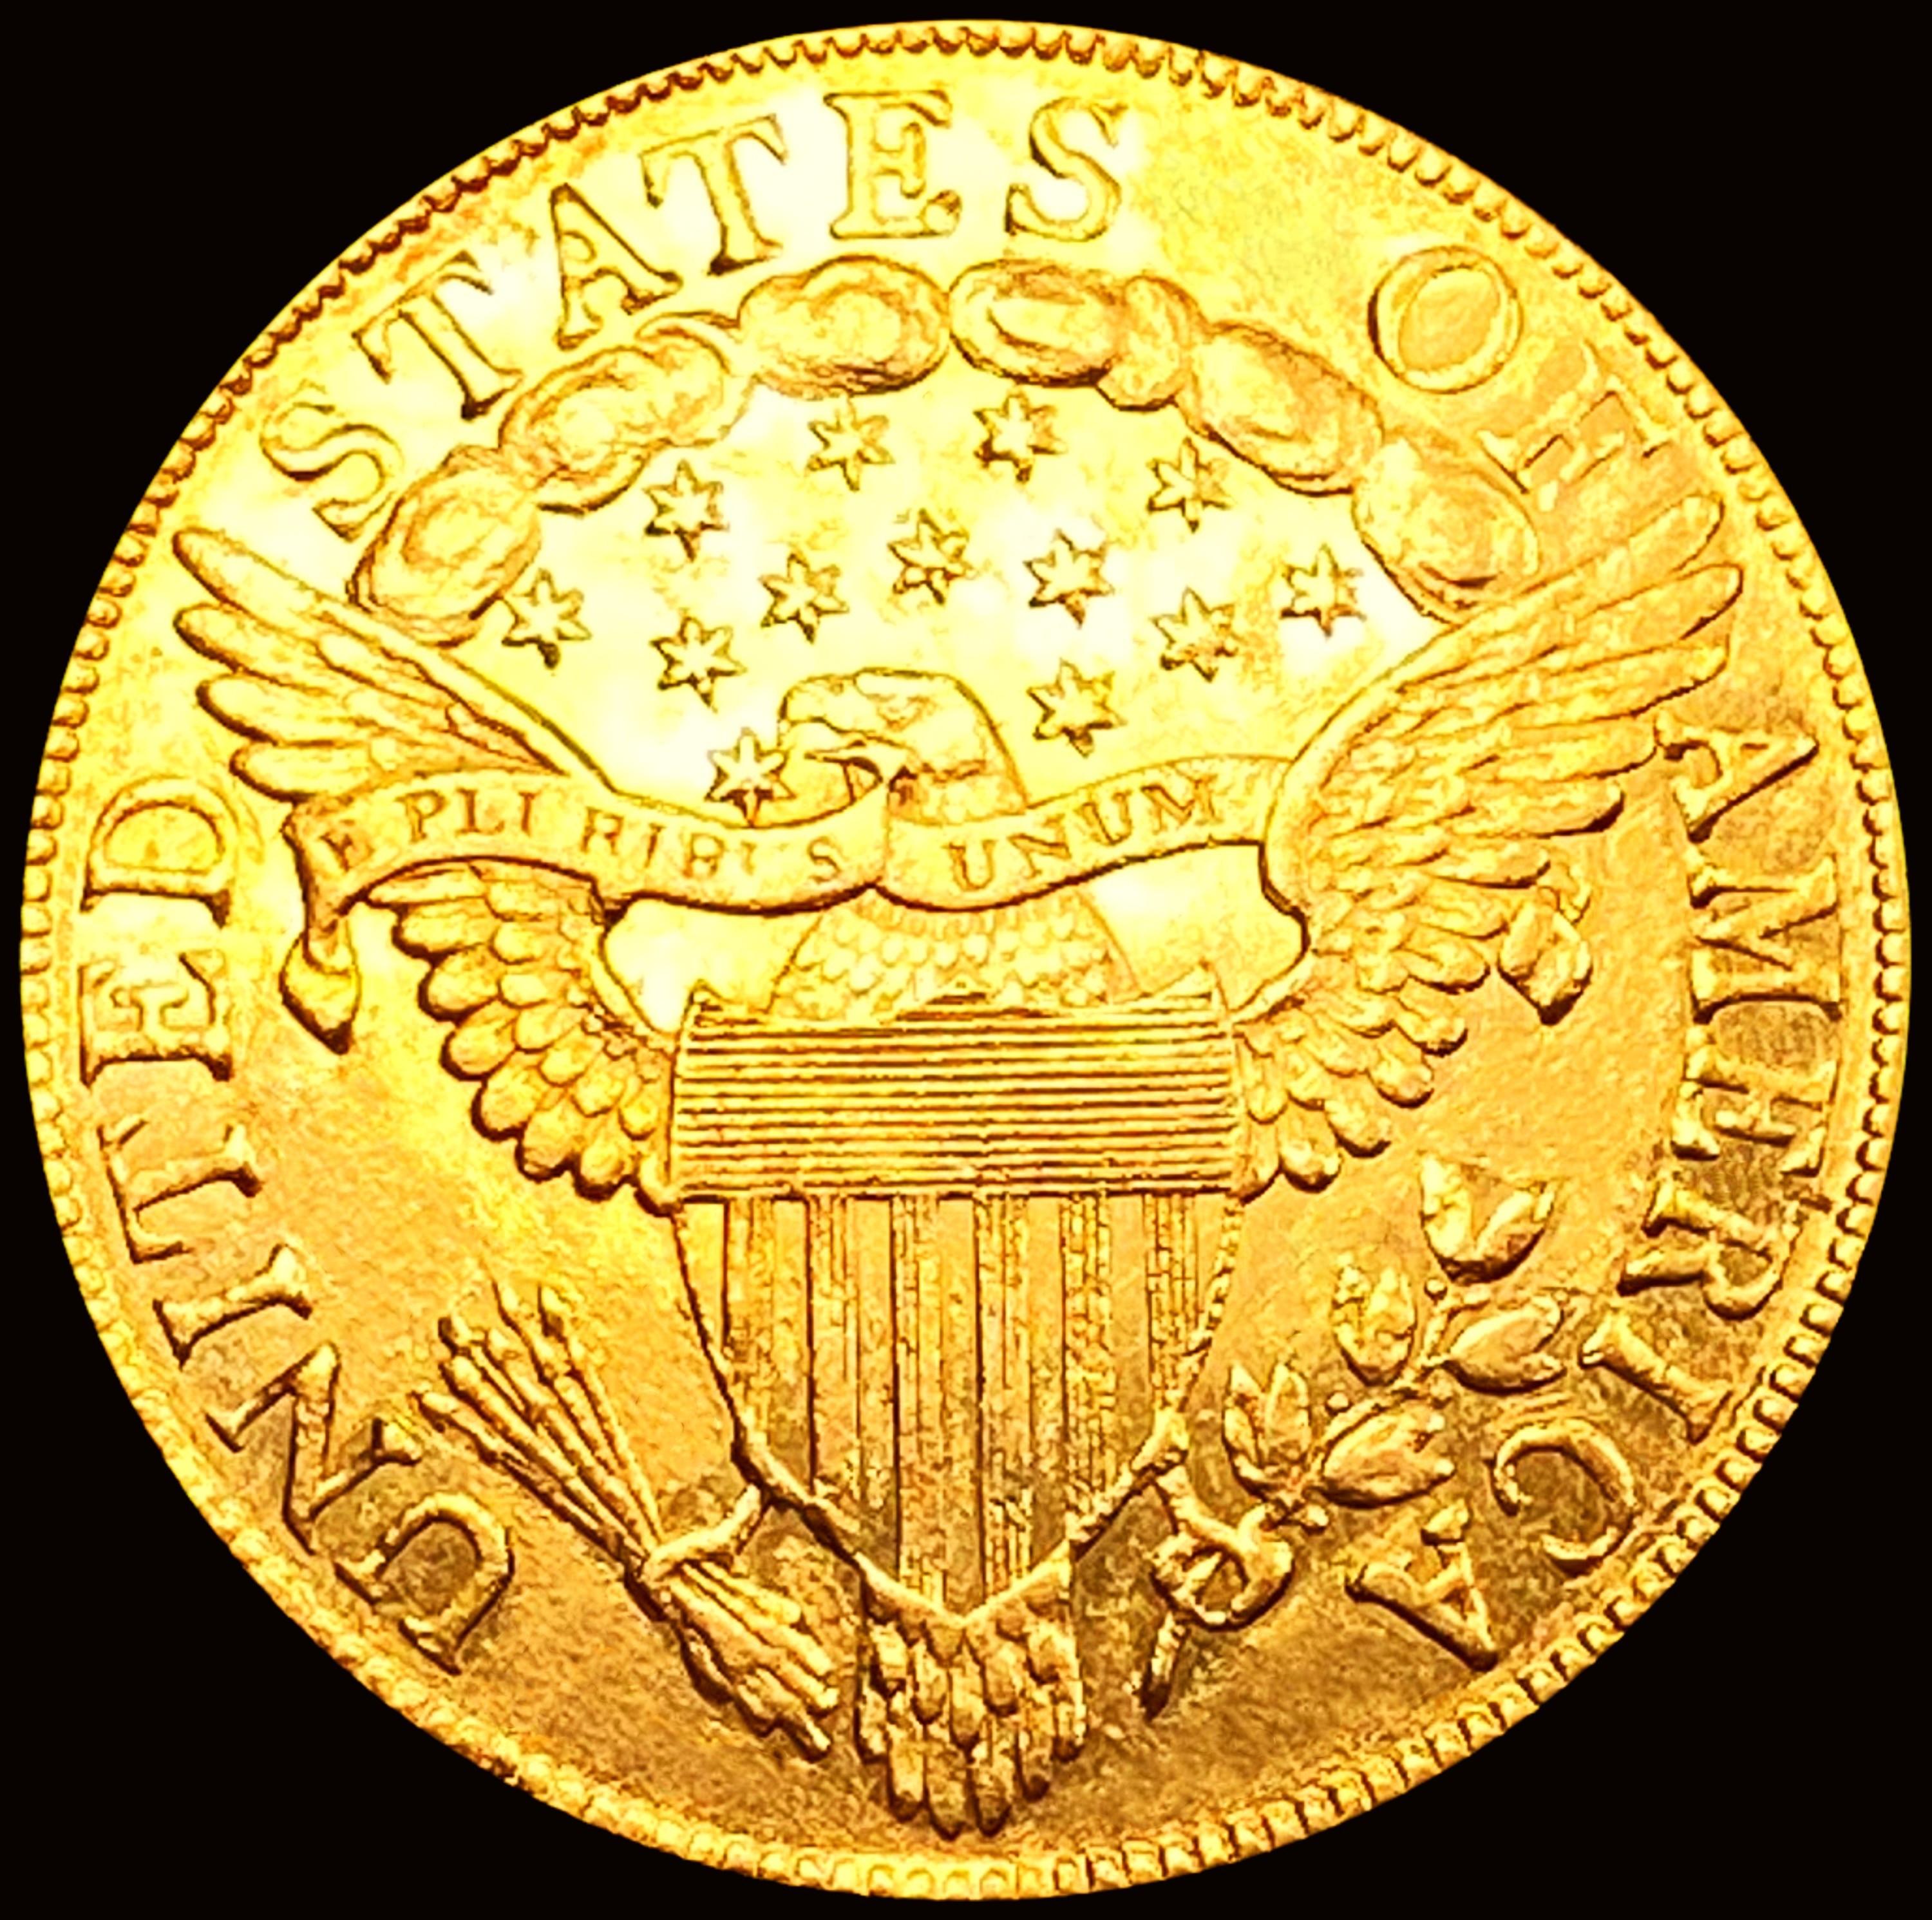 1801 $10 Gold Eagle CHOICE BU